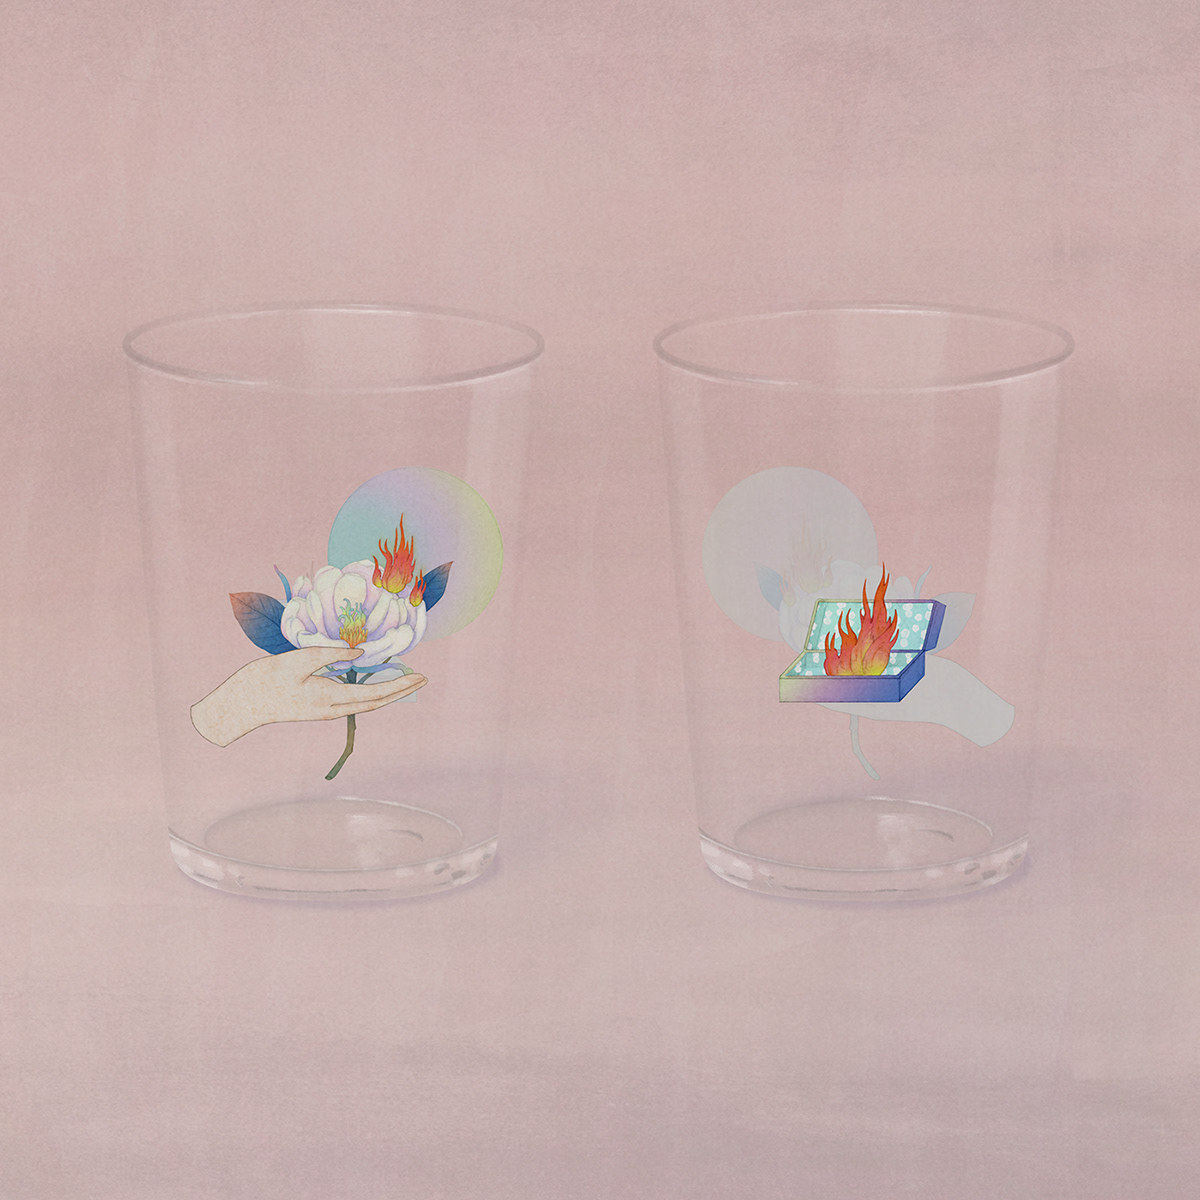 Delicately Illustrated Glassware By Whooli Chen And Di Chun Chen (3)